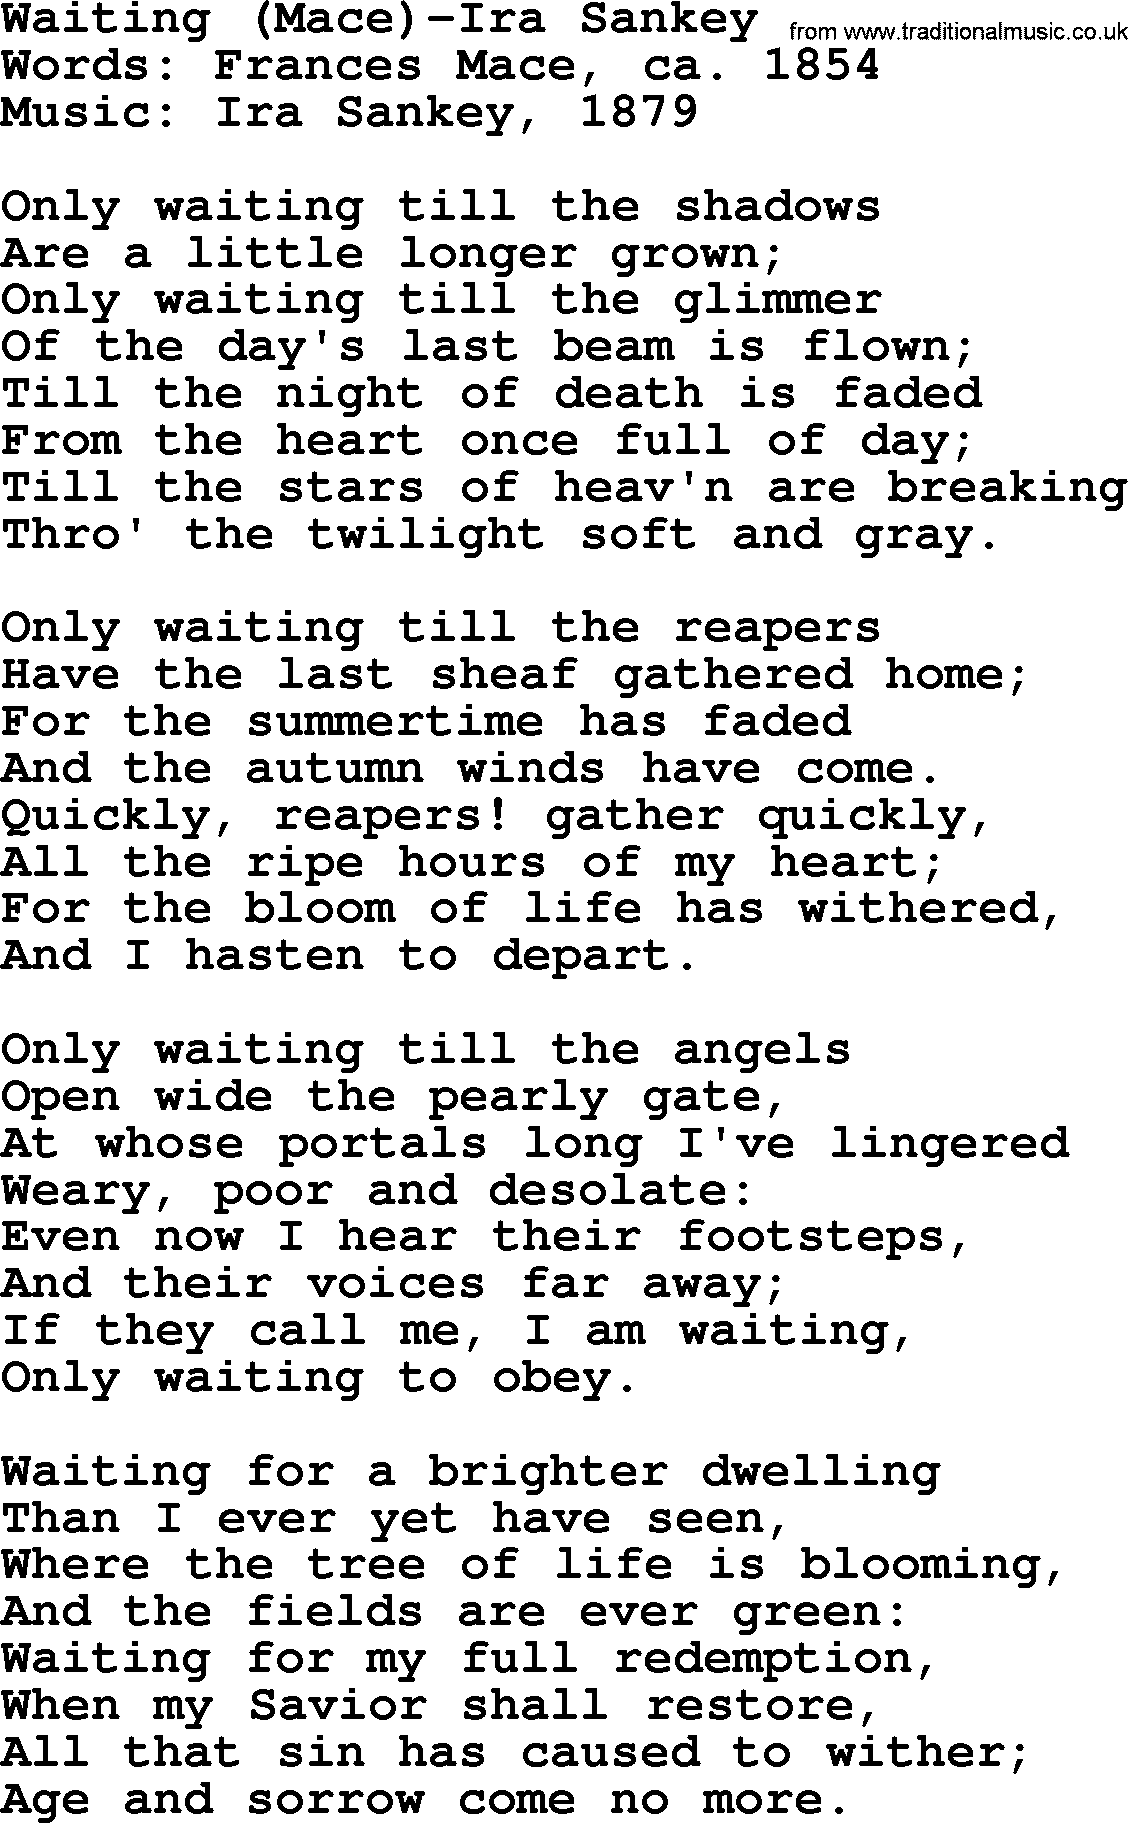 Ira Sankey hymn: Waiting-Ira Sankey, lyrics